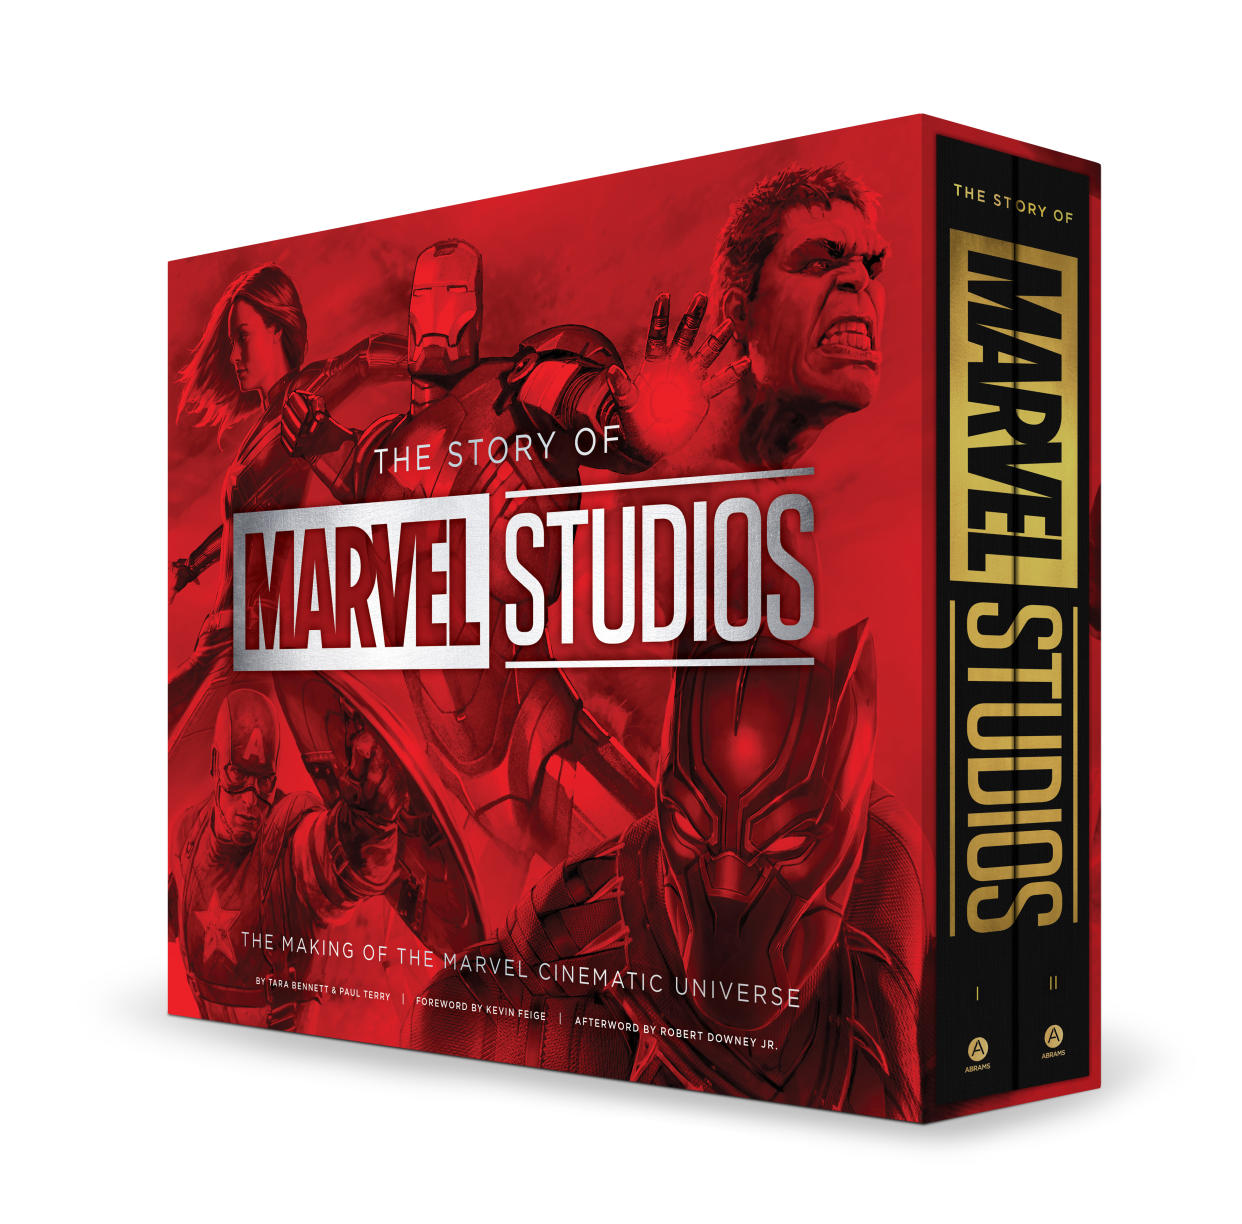 The Story of Marvel Studios (Photo: Abrams Books)